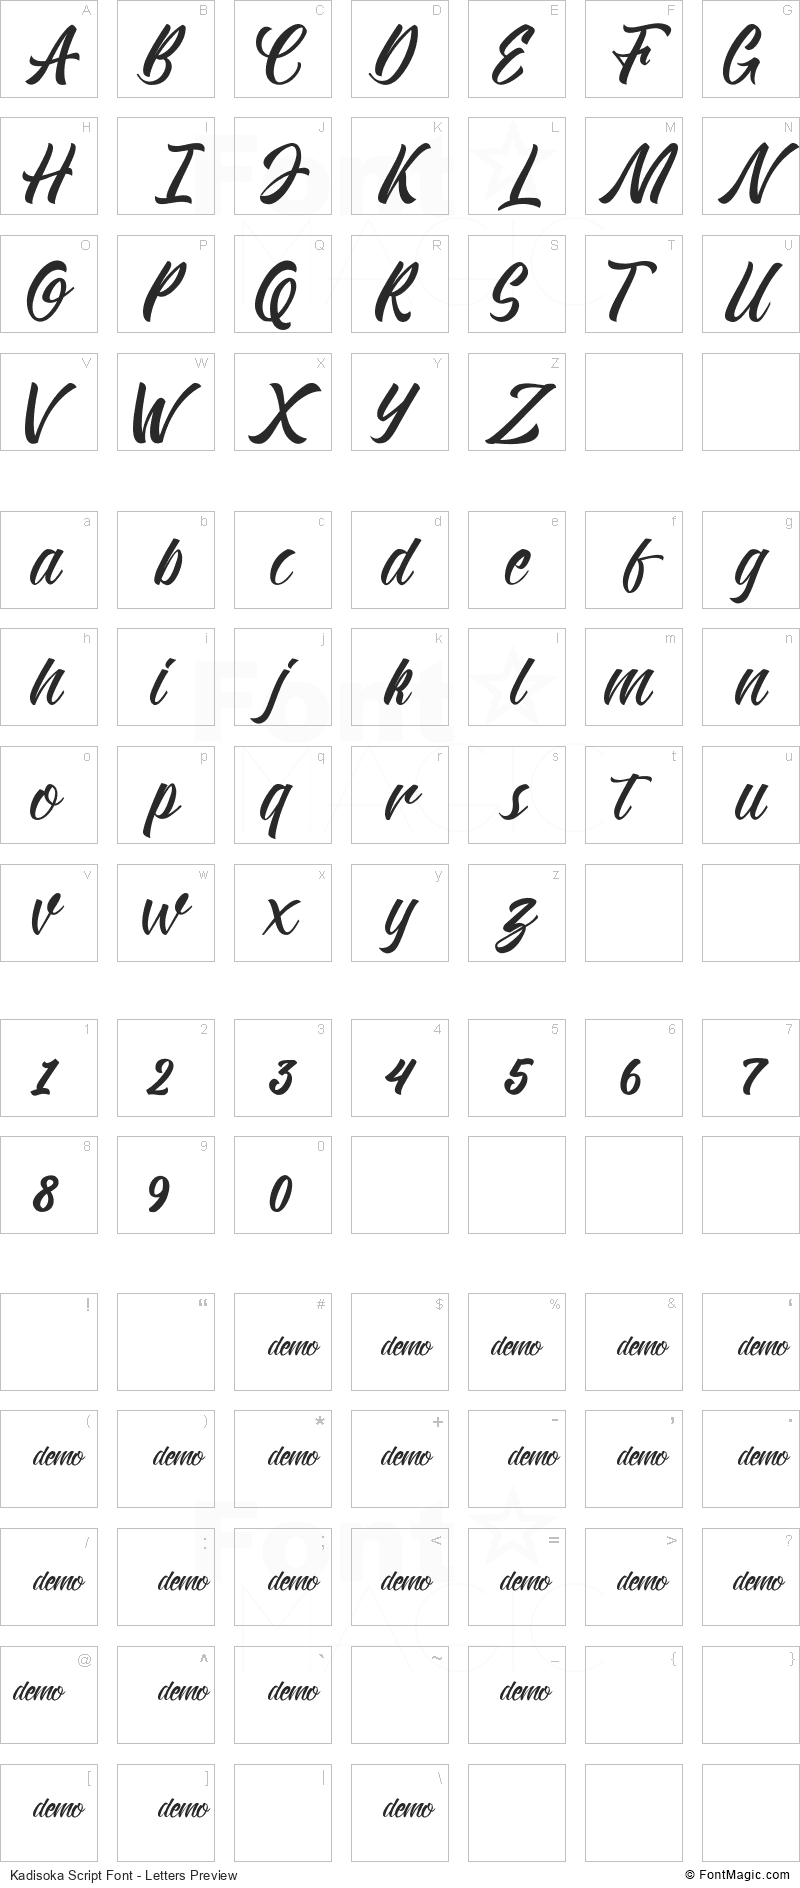 Kadisoka Script Font - All Latters Preview Chart